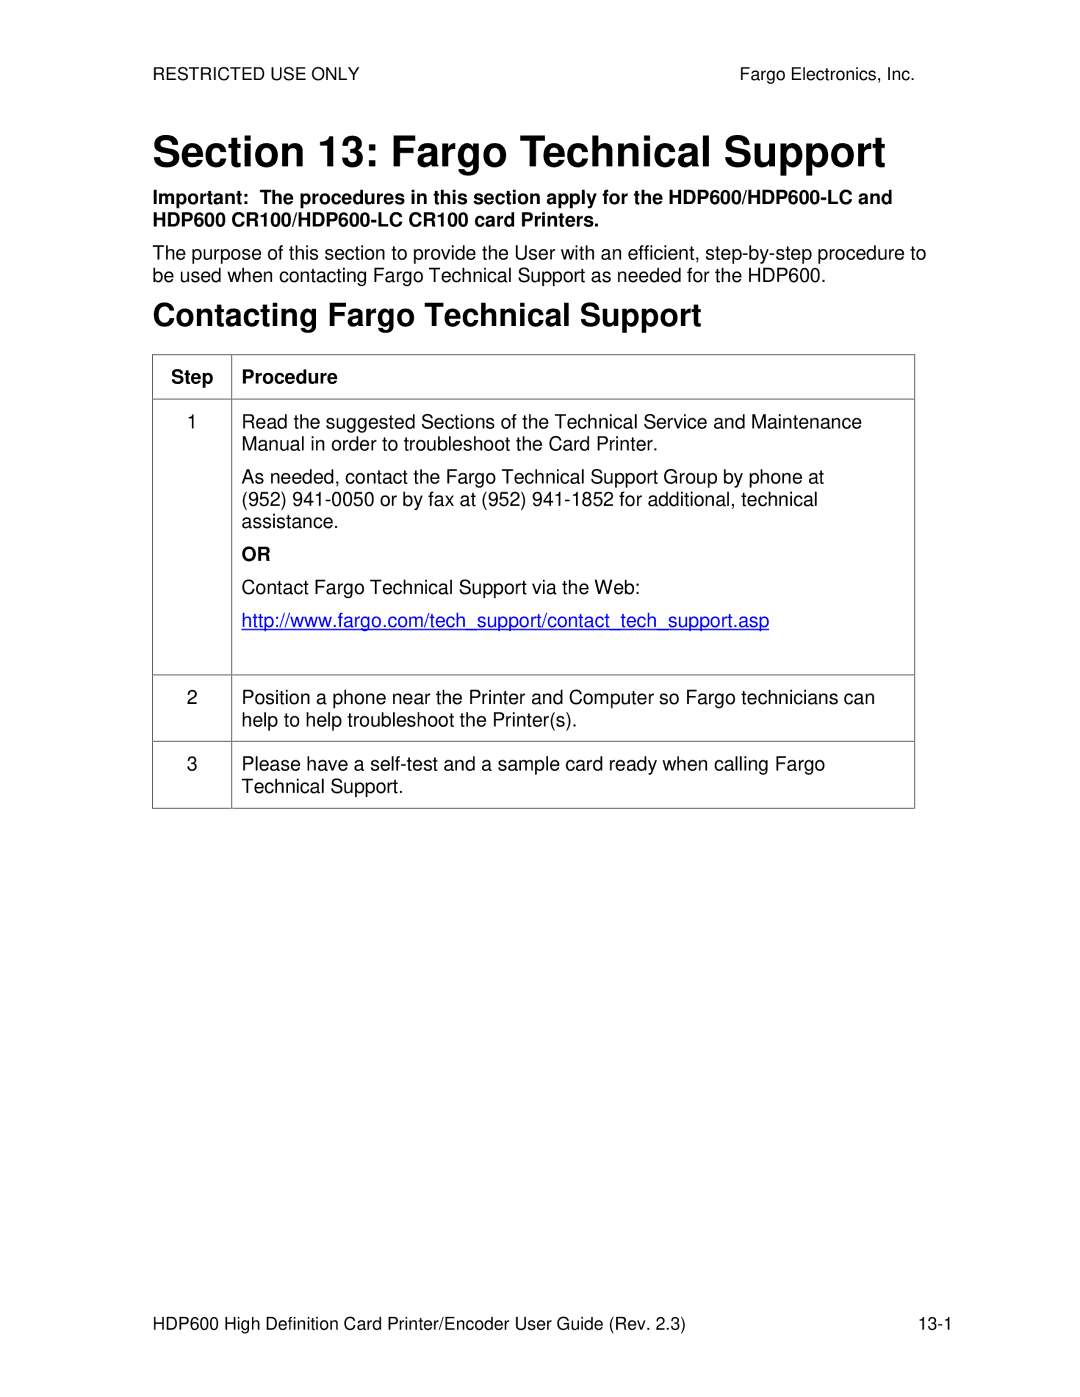 FARGO electronic HDP600-LC, HDP600 CR100 manual Contacting Fargo Technical Support 